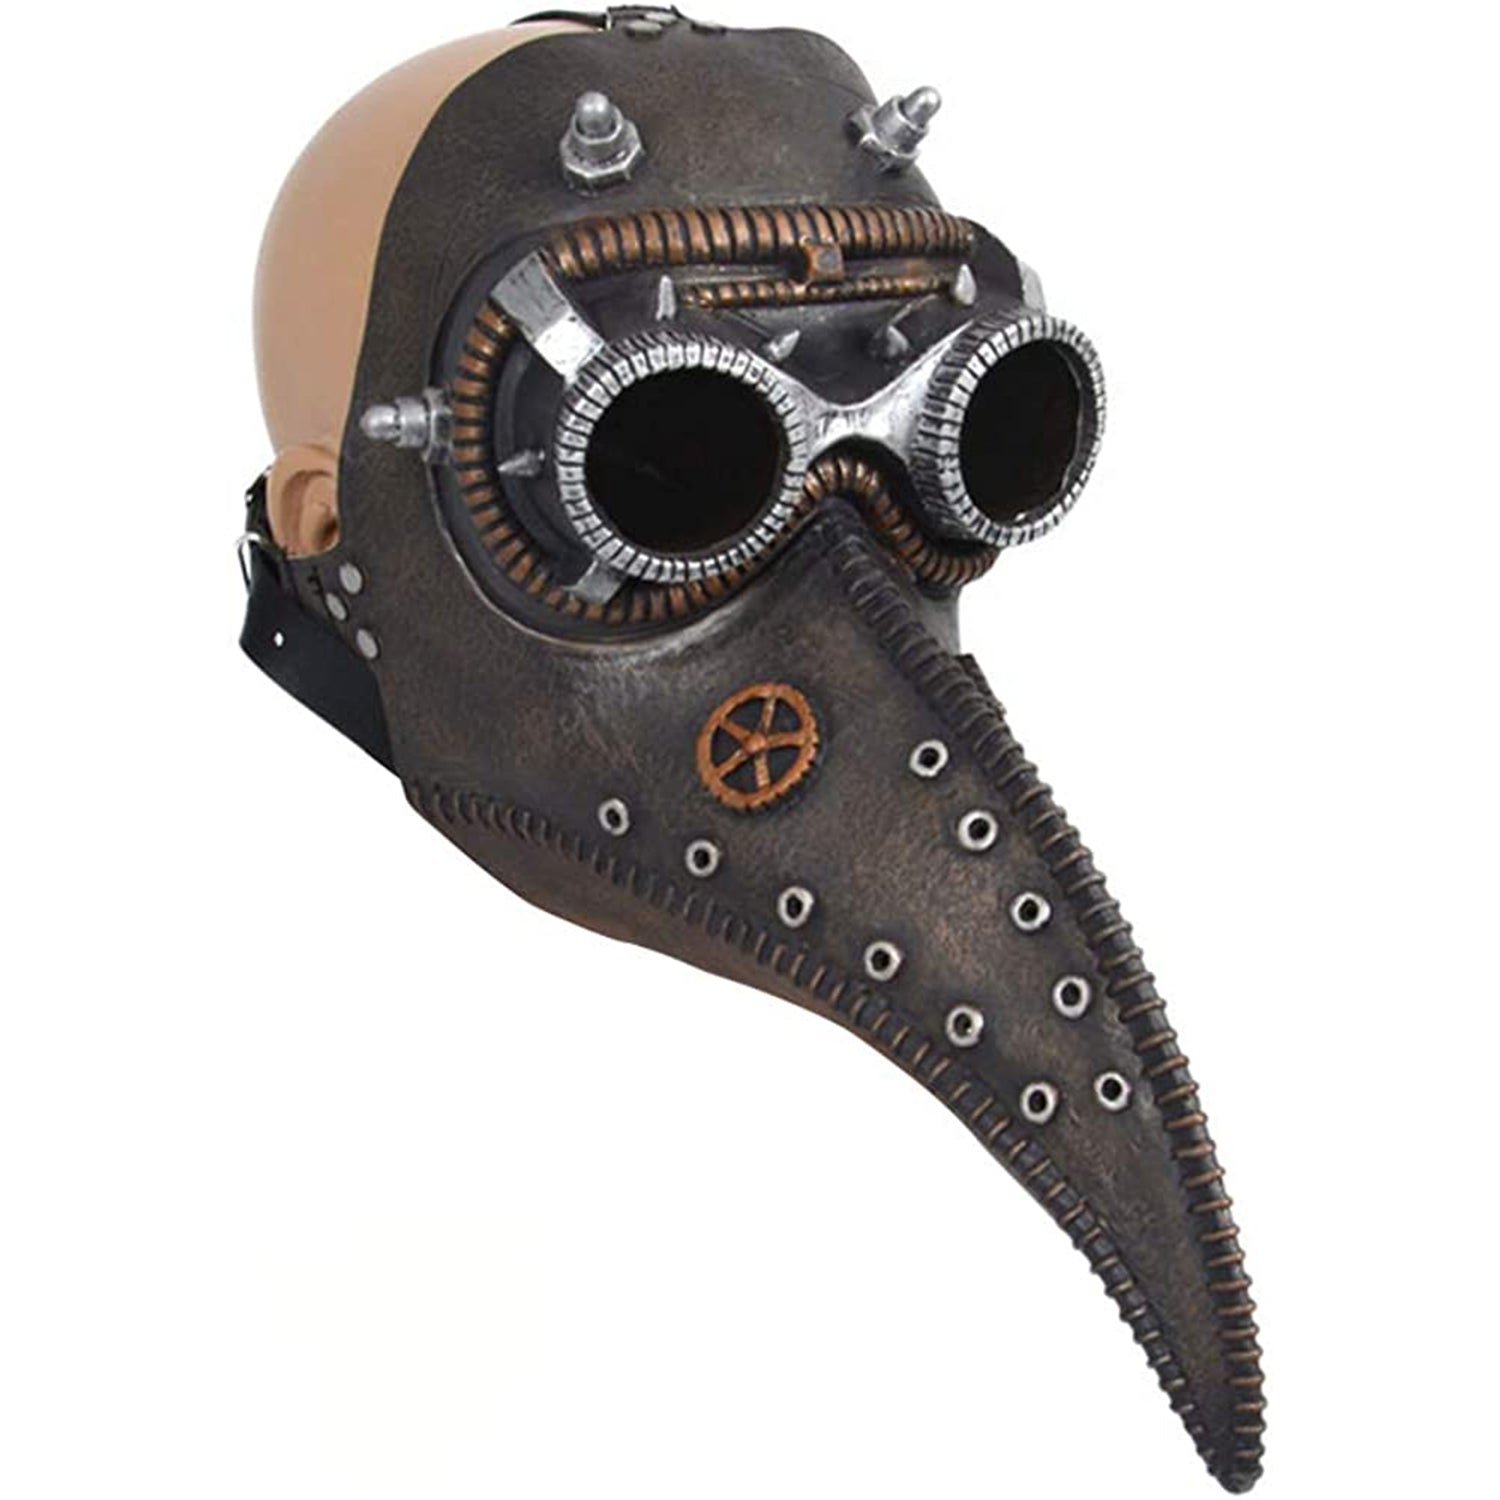 Melliful Beak Mask Long Nose Bird Cosplay Party Props Costume Halloween Plague Steam Doctors Punk Mask